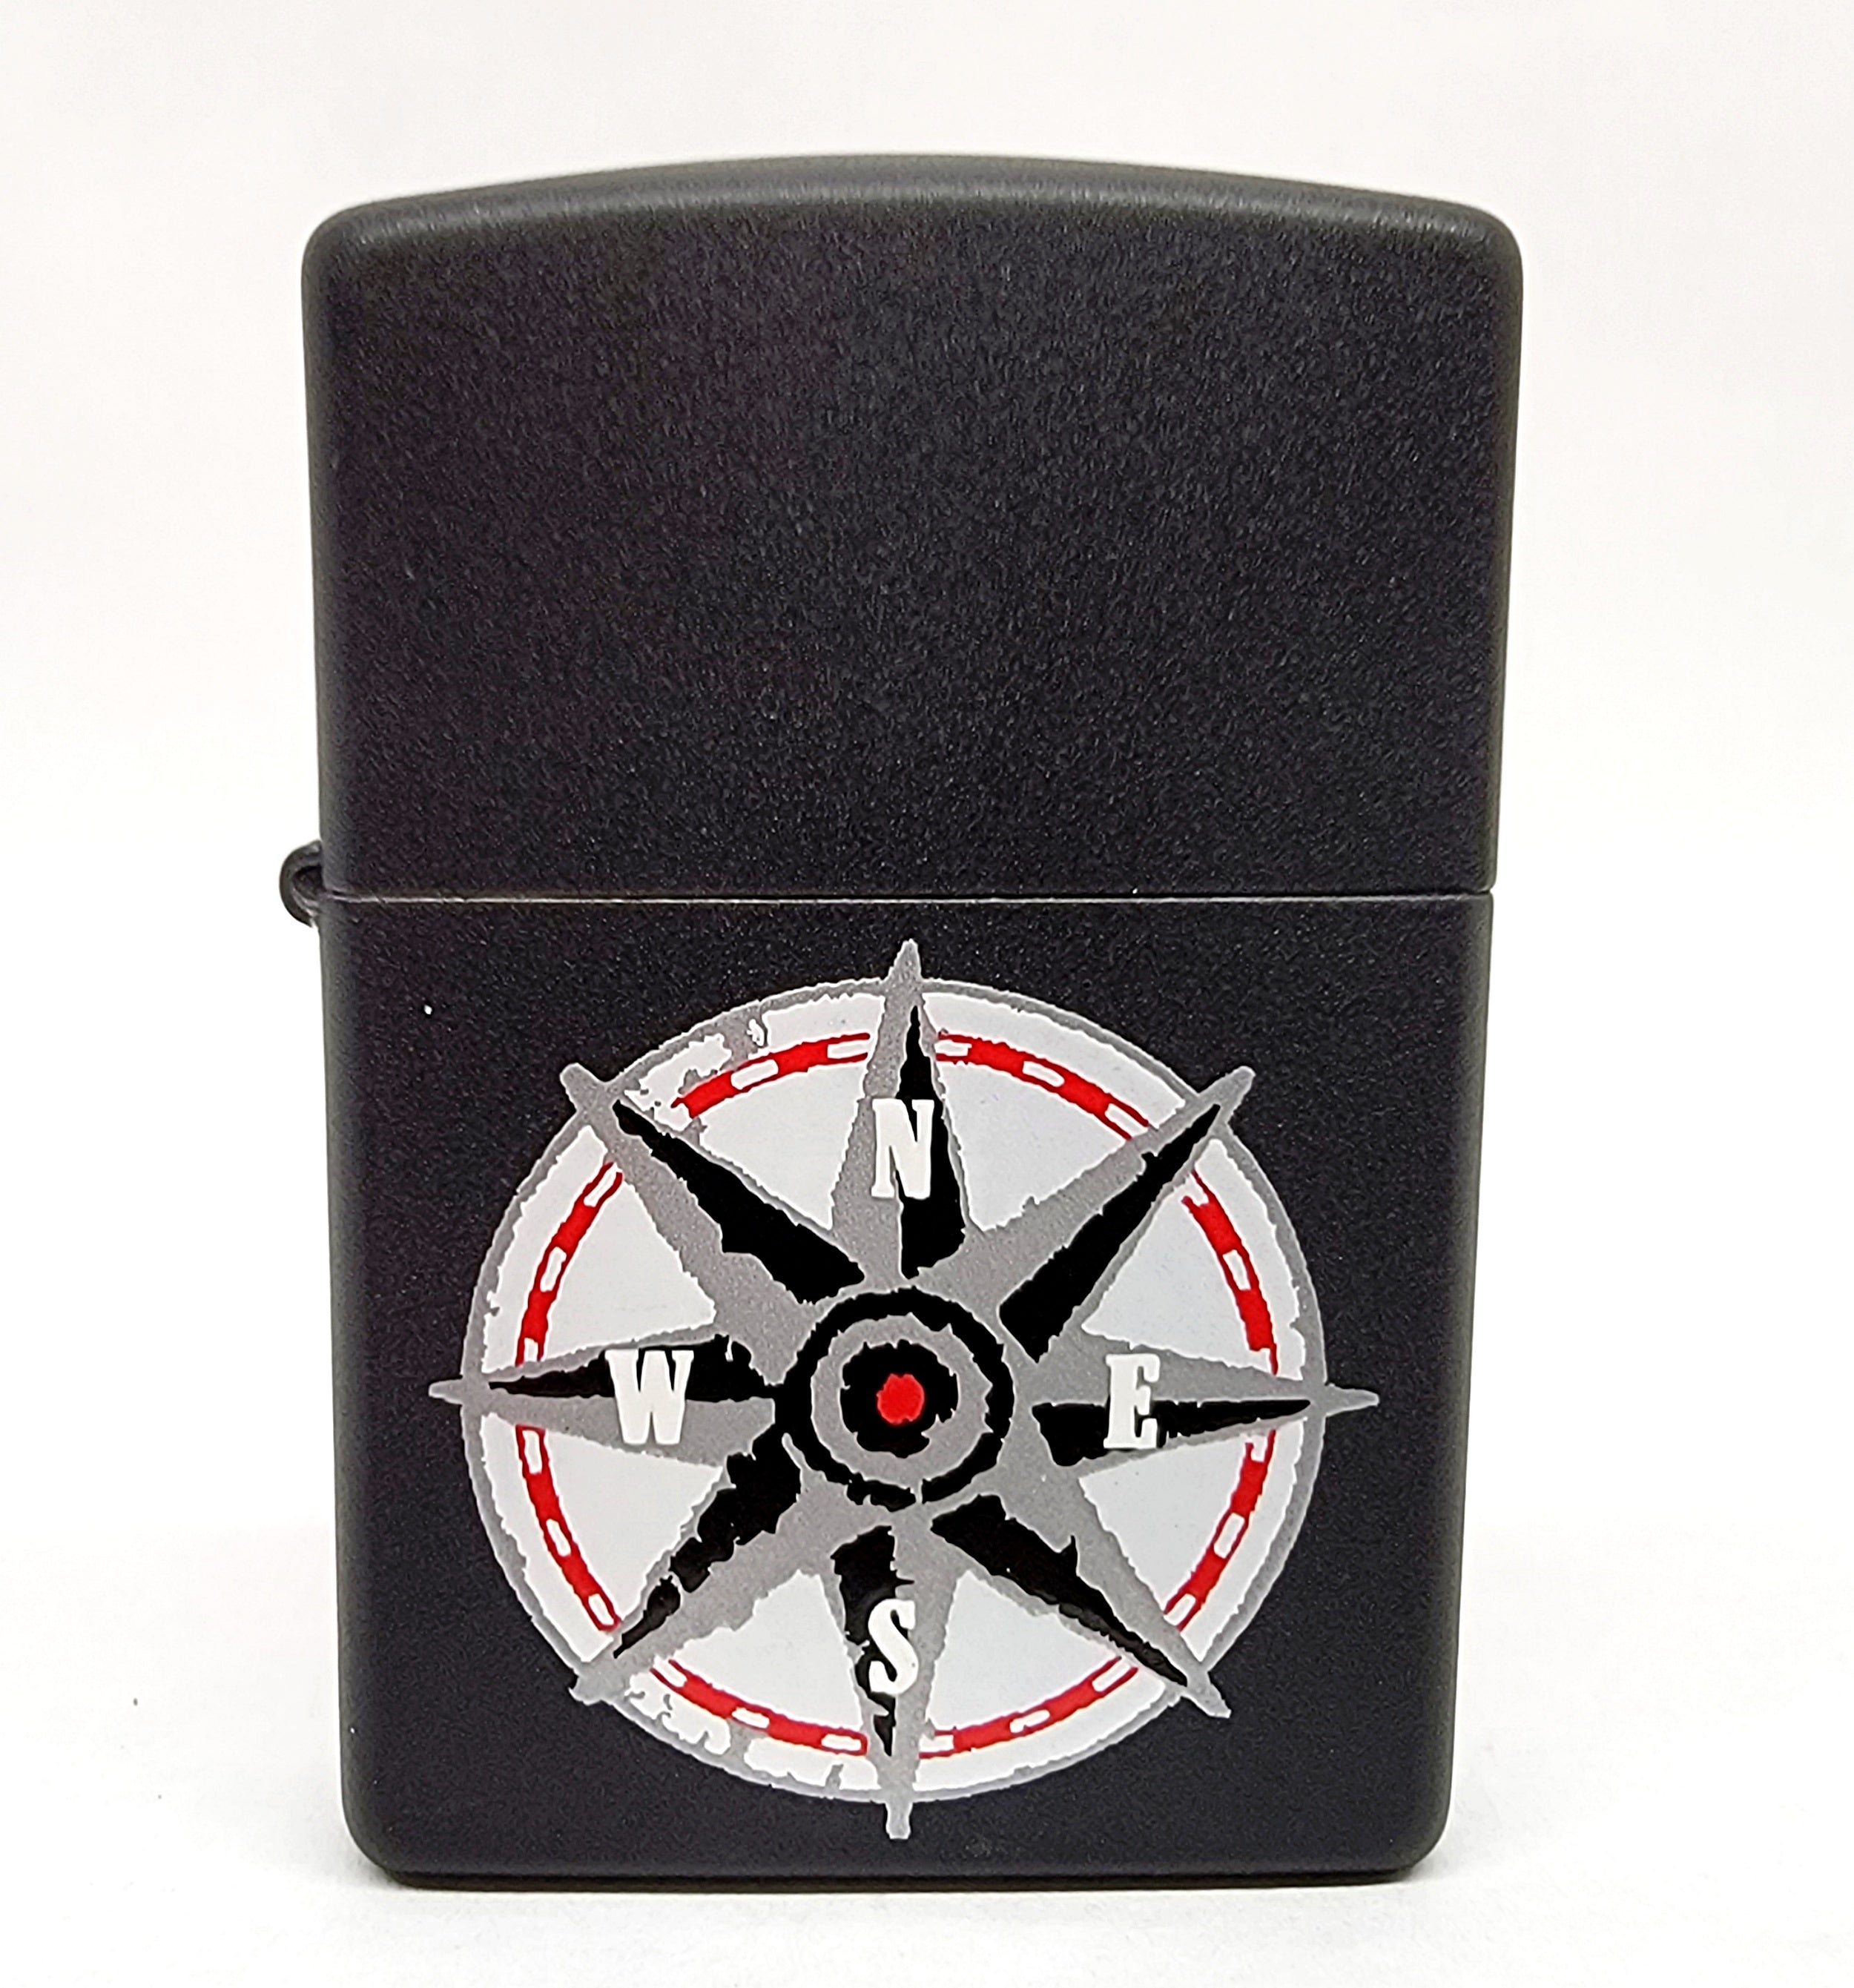 New XIV 1998 Marlboro Compass Black Matte Zippo Lighter